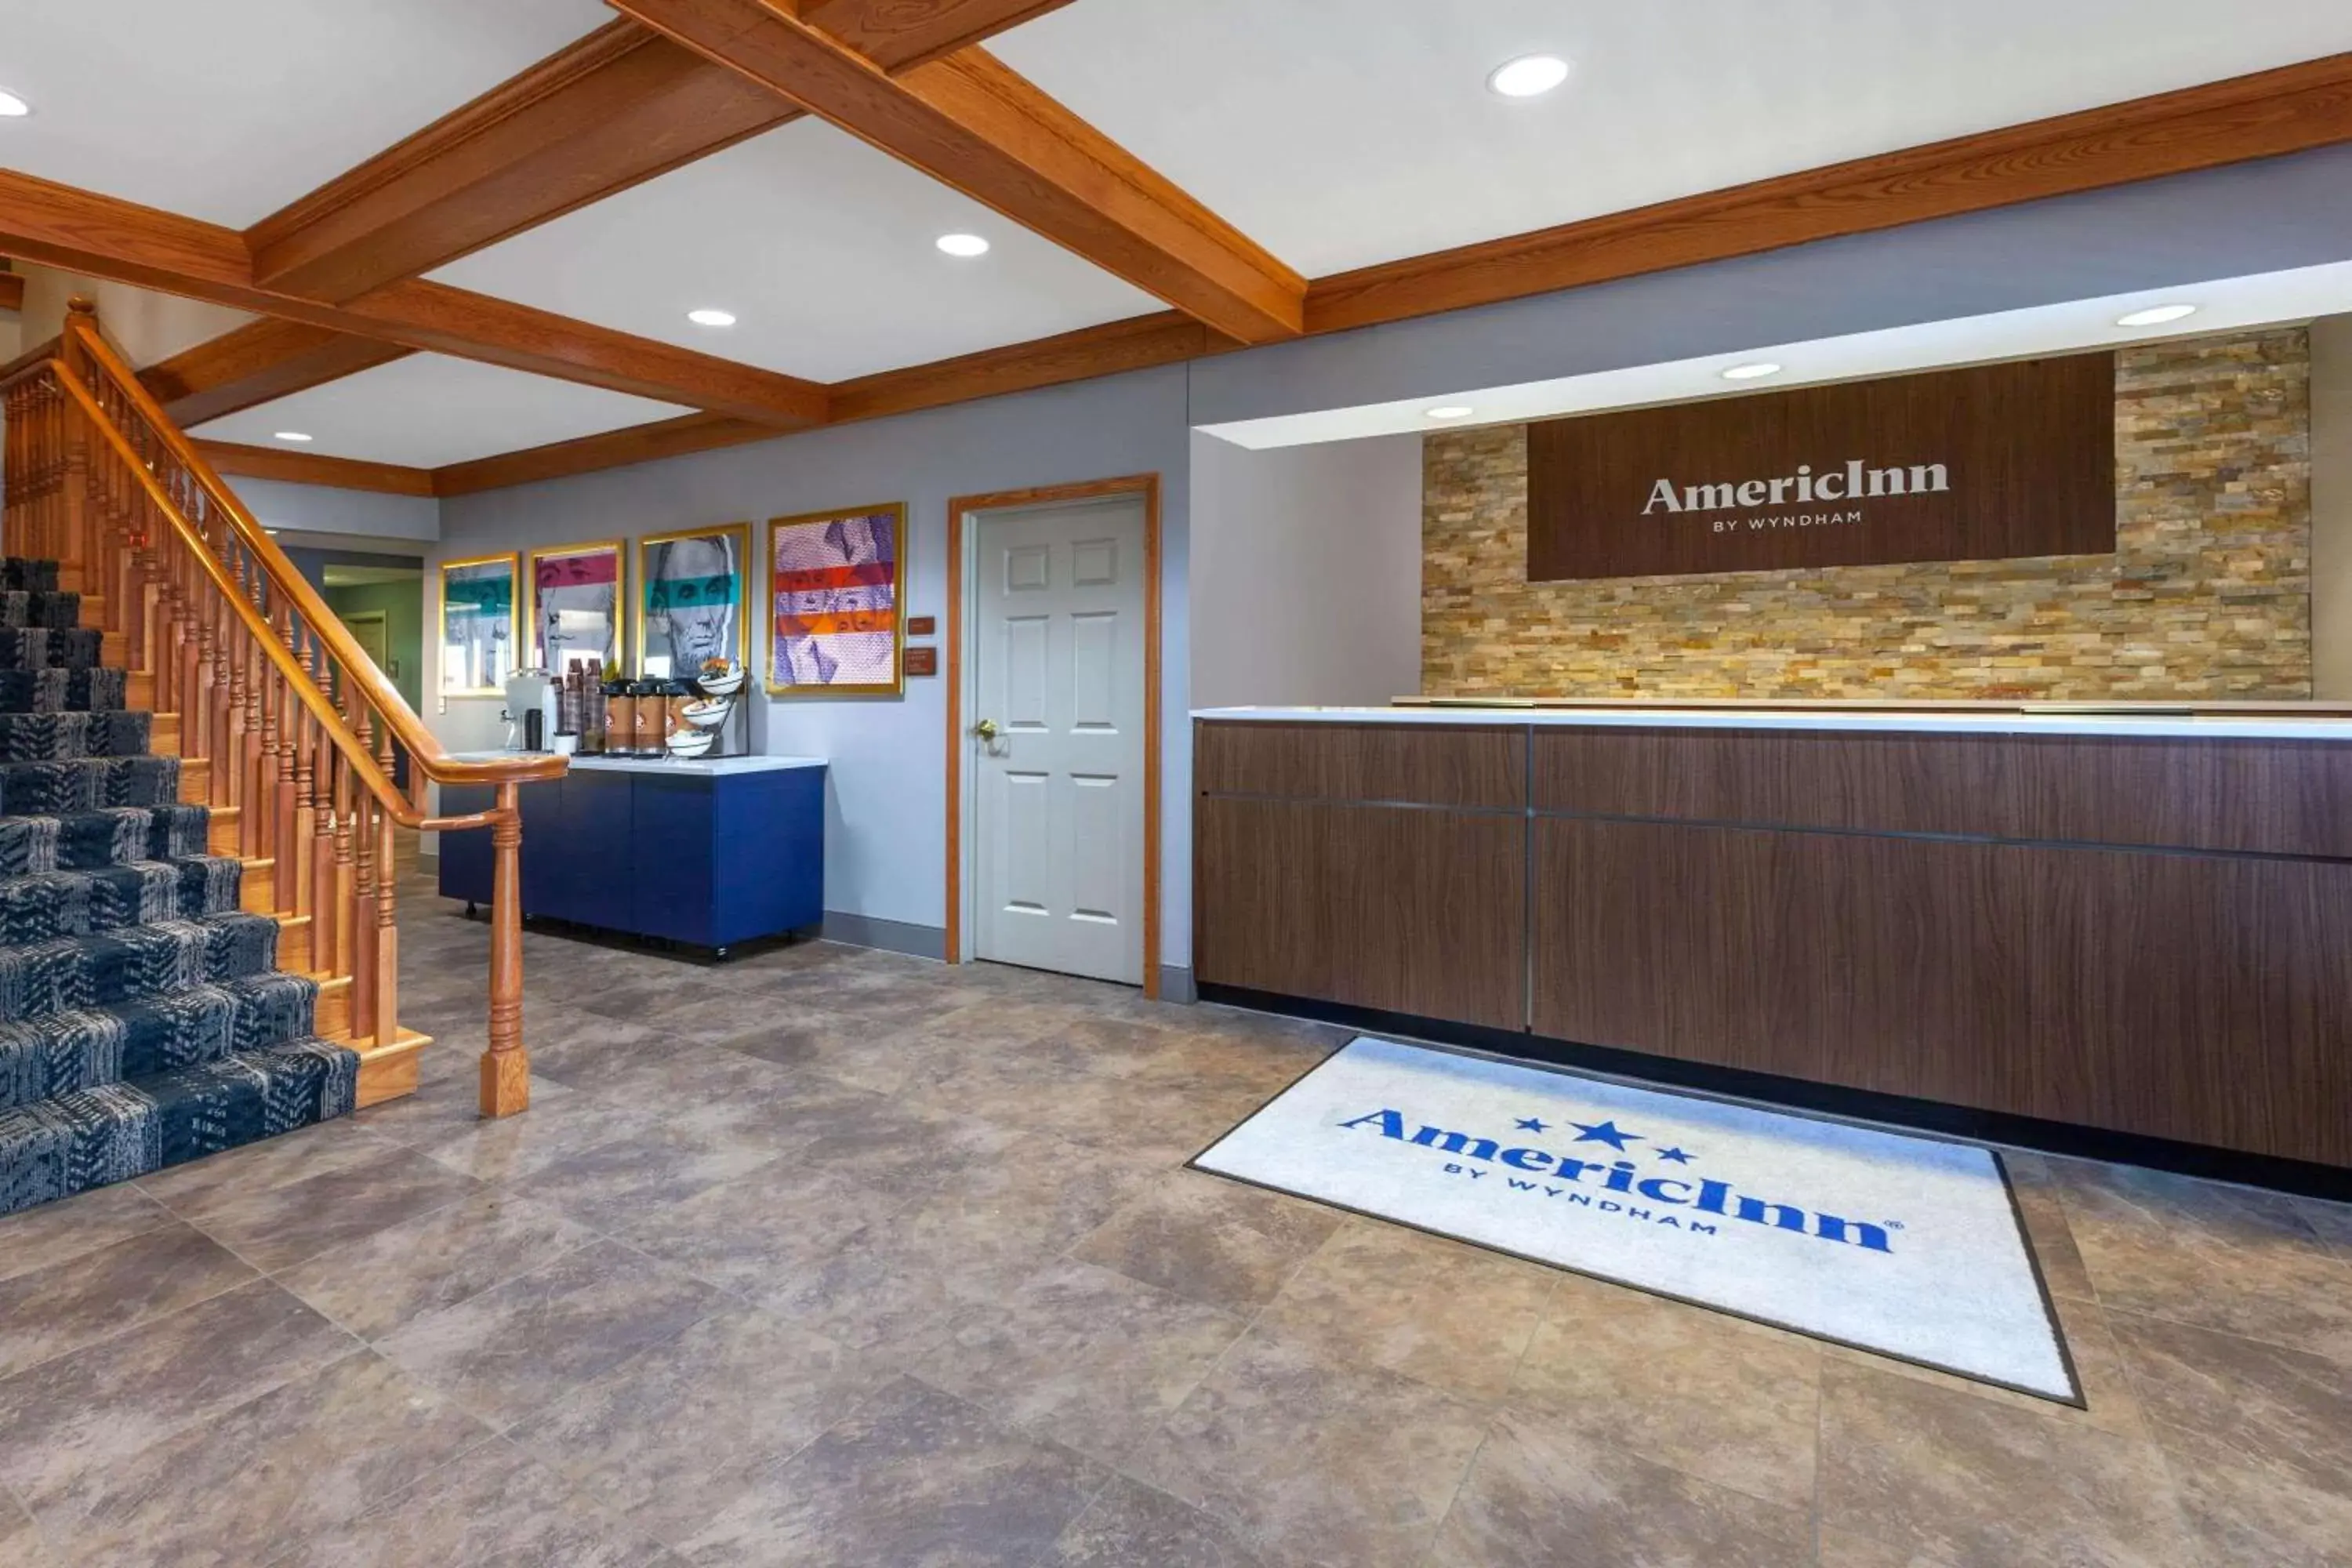 Coffee/tea facilities, Lobby/Reception in AmericInn by Wyndham Iron Mountain